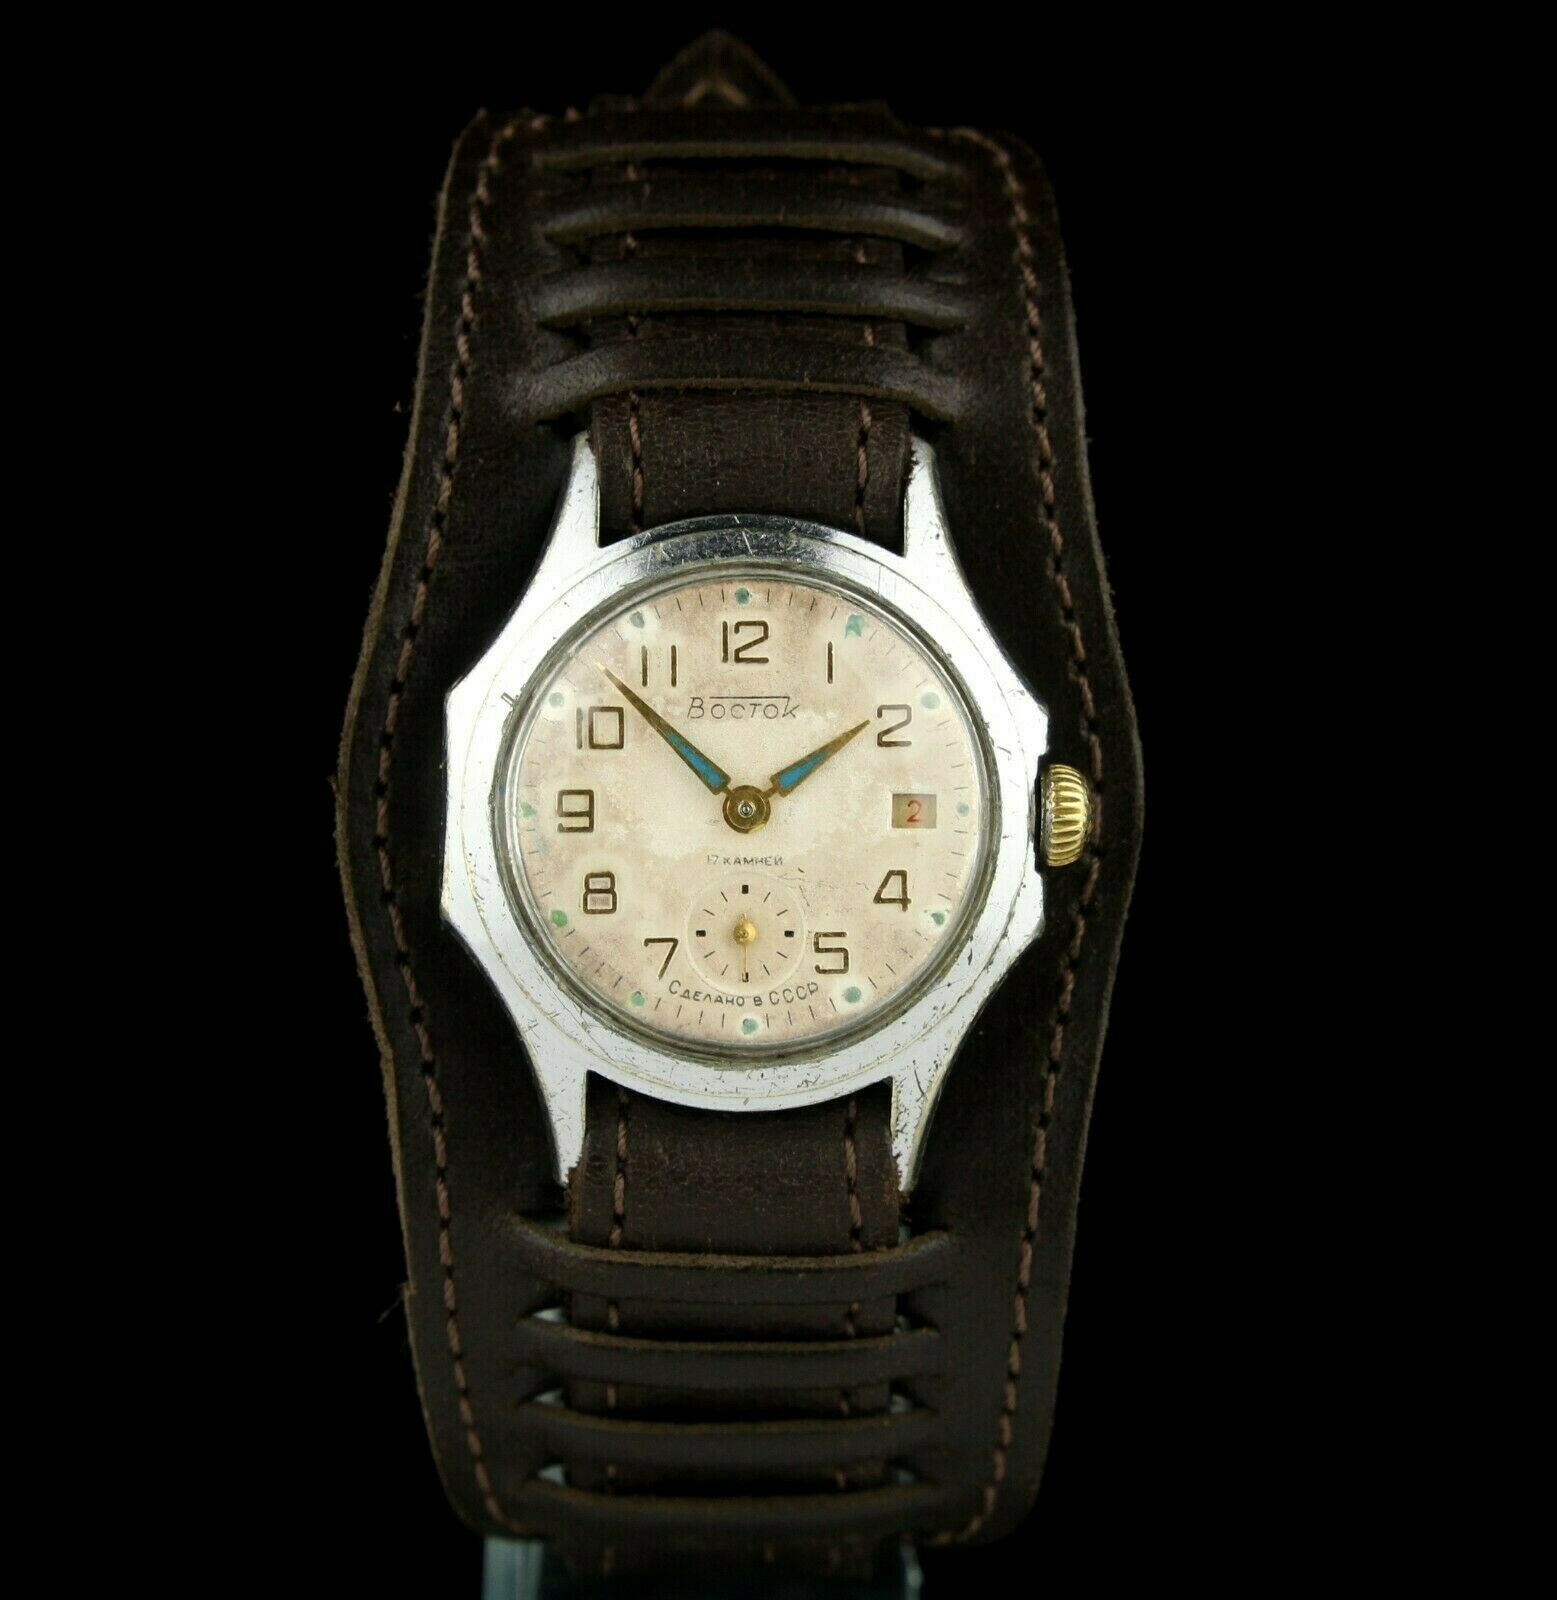 Buy VOSTOK BOCTOK Original USSR Russian Vintage Wrist Watch Mechanical  Serviced Online in India - Etsy